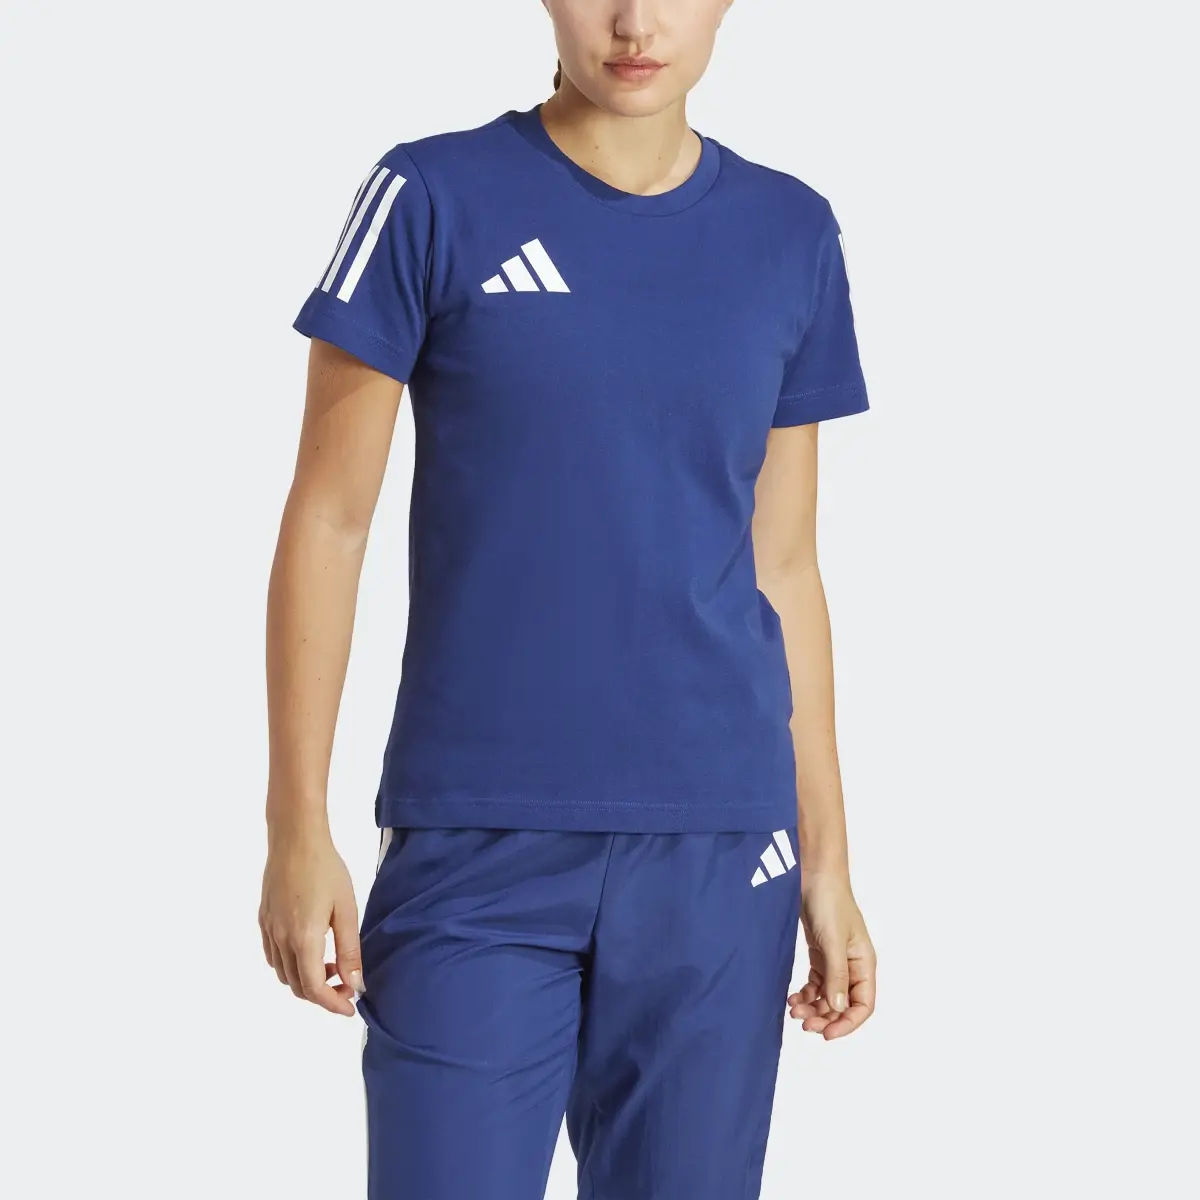 Adidas Frankreich Cotton Graphic T-Shirt. 1